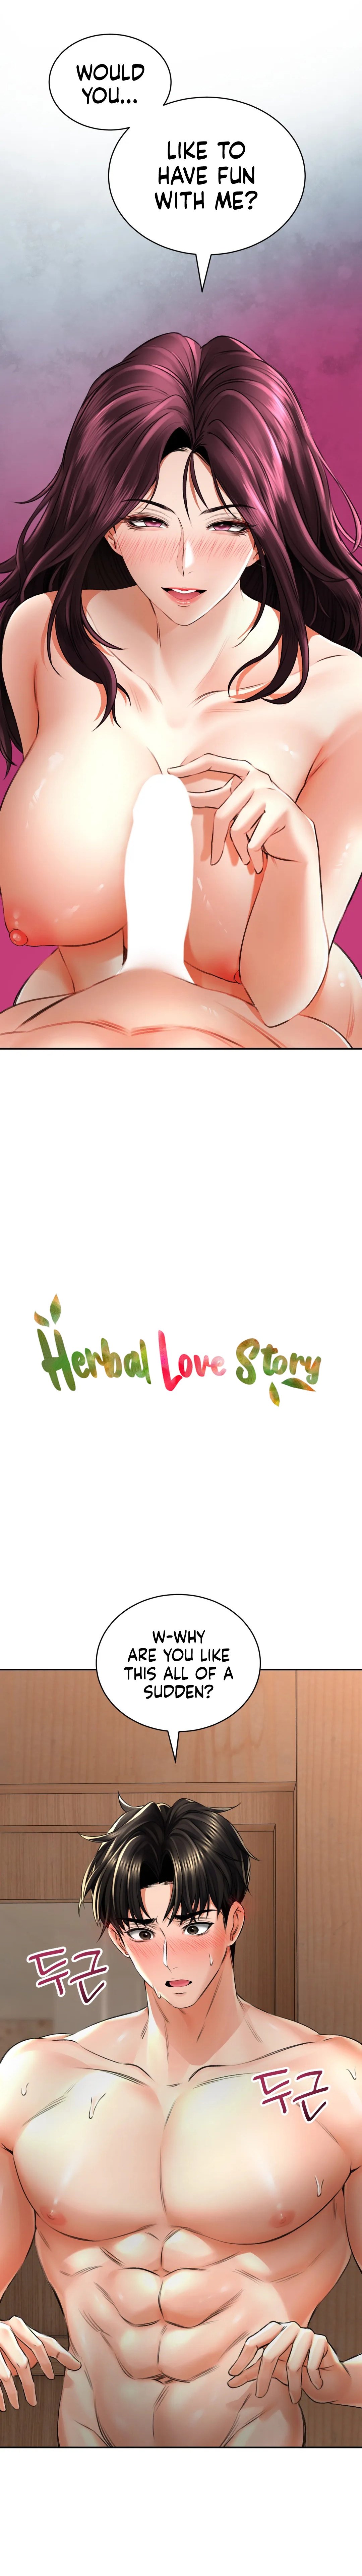 herbal-love-story-chap-8-1